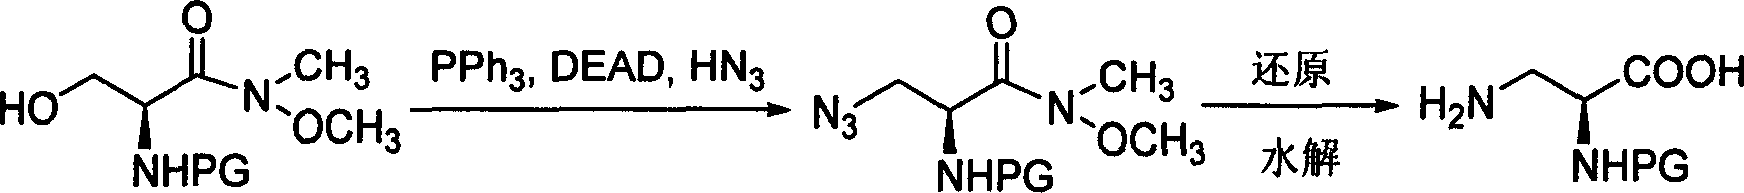 N alpha-Boc-N beta-Cbz-L-2,3 diaminopropionic acid derivative synthesis method